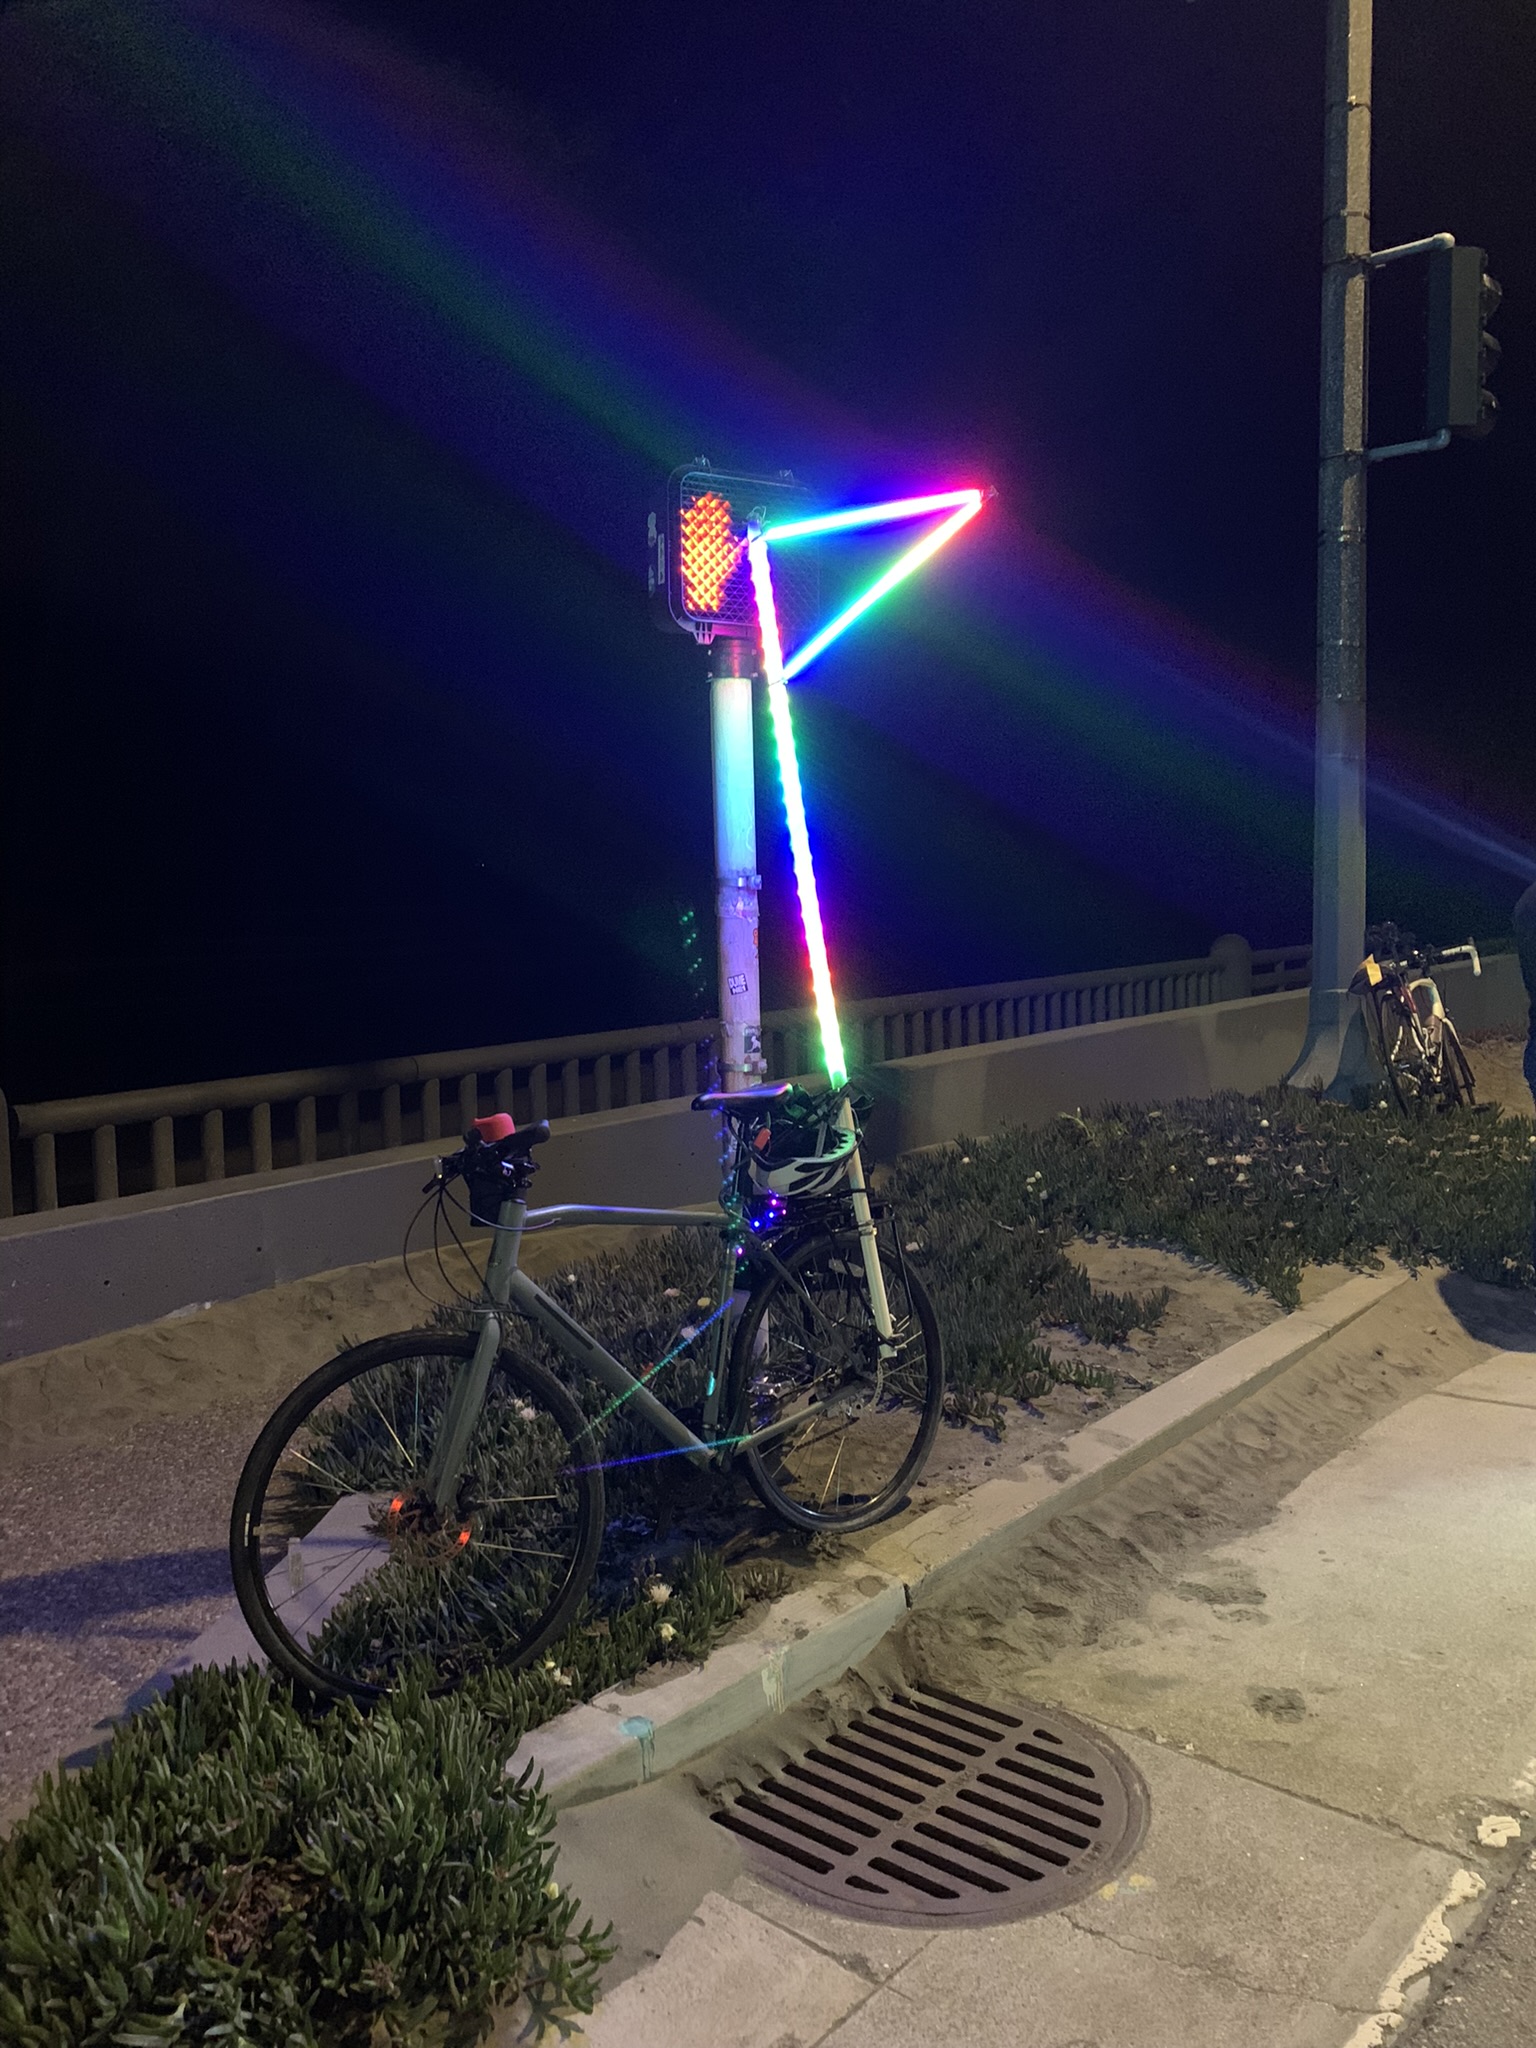 My raindbow bike flag leaning on a Great Walkway pedestrian signal.